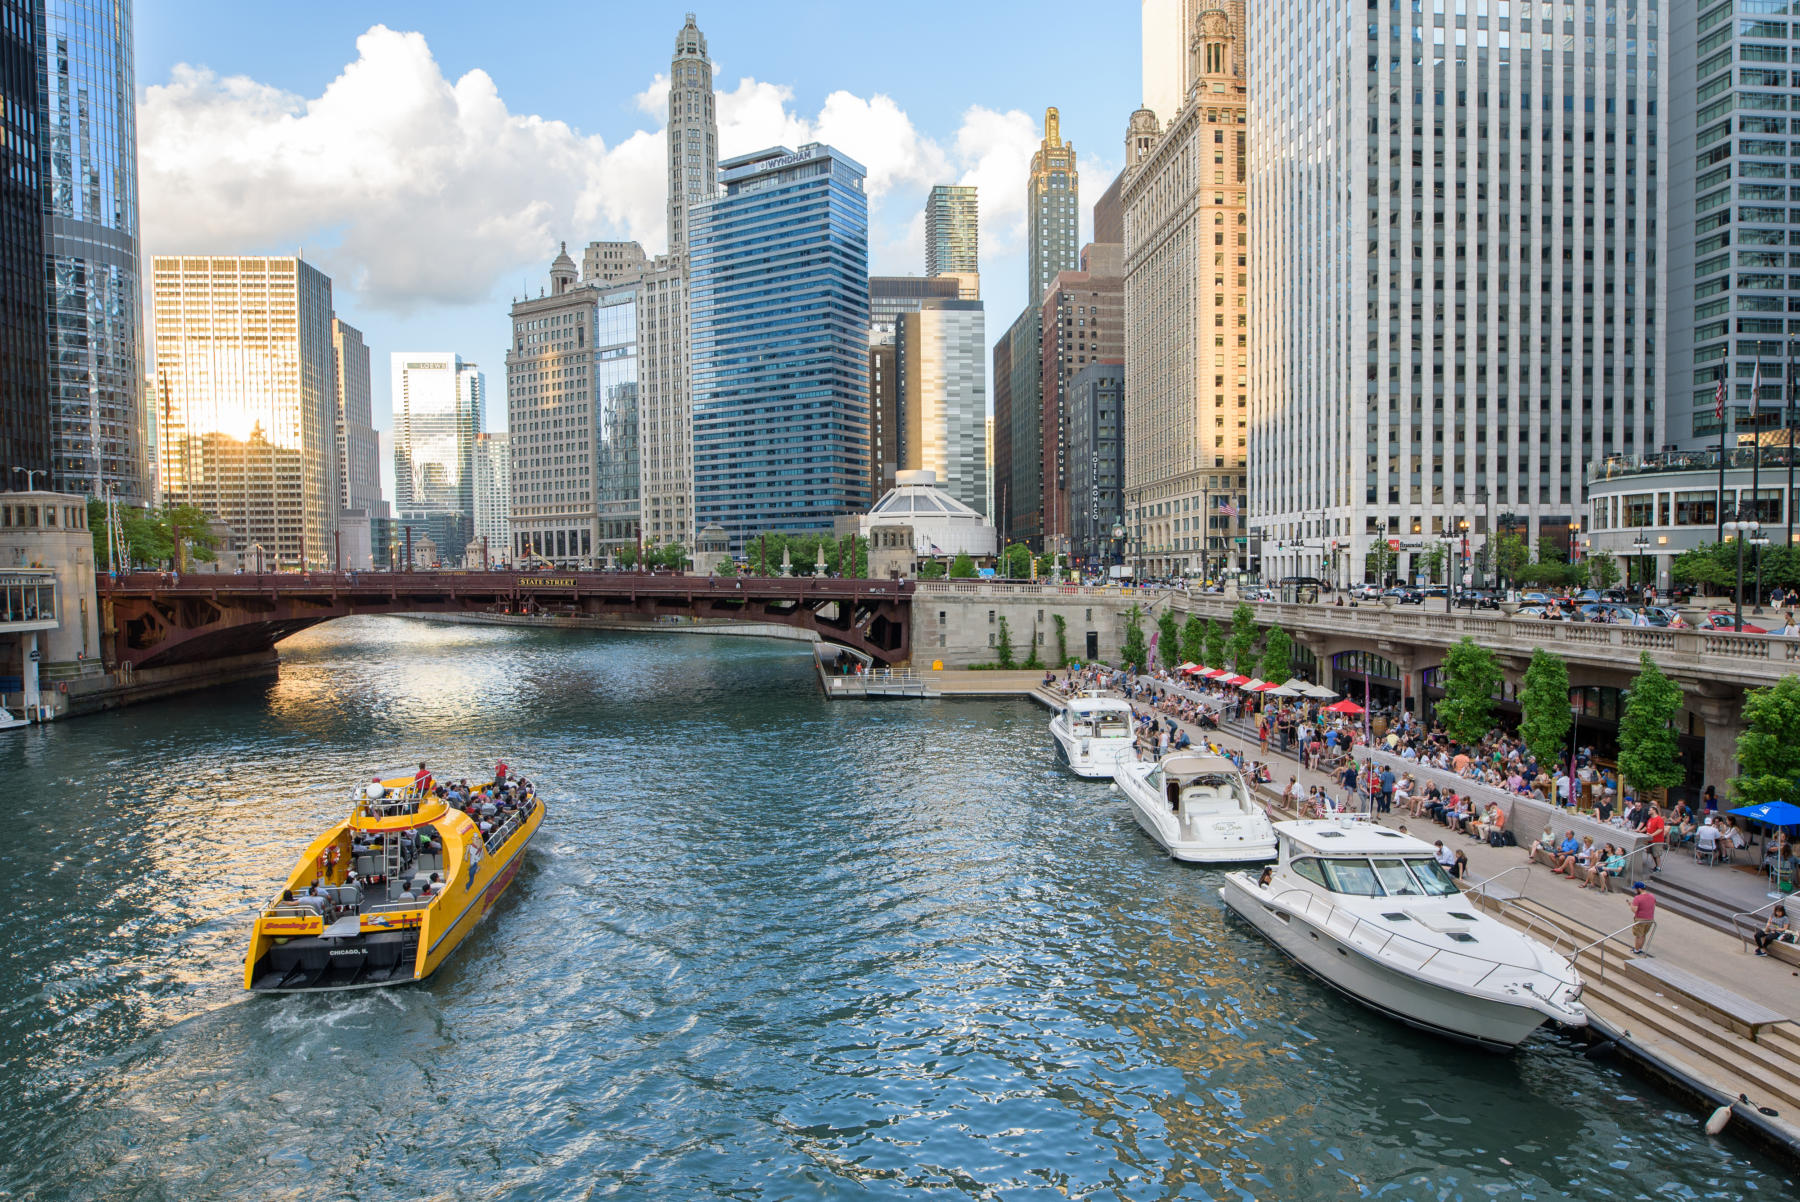 Chicago Riverwalk | Find Tours, Restaurants, Museums & Art